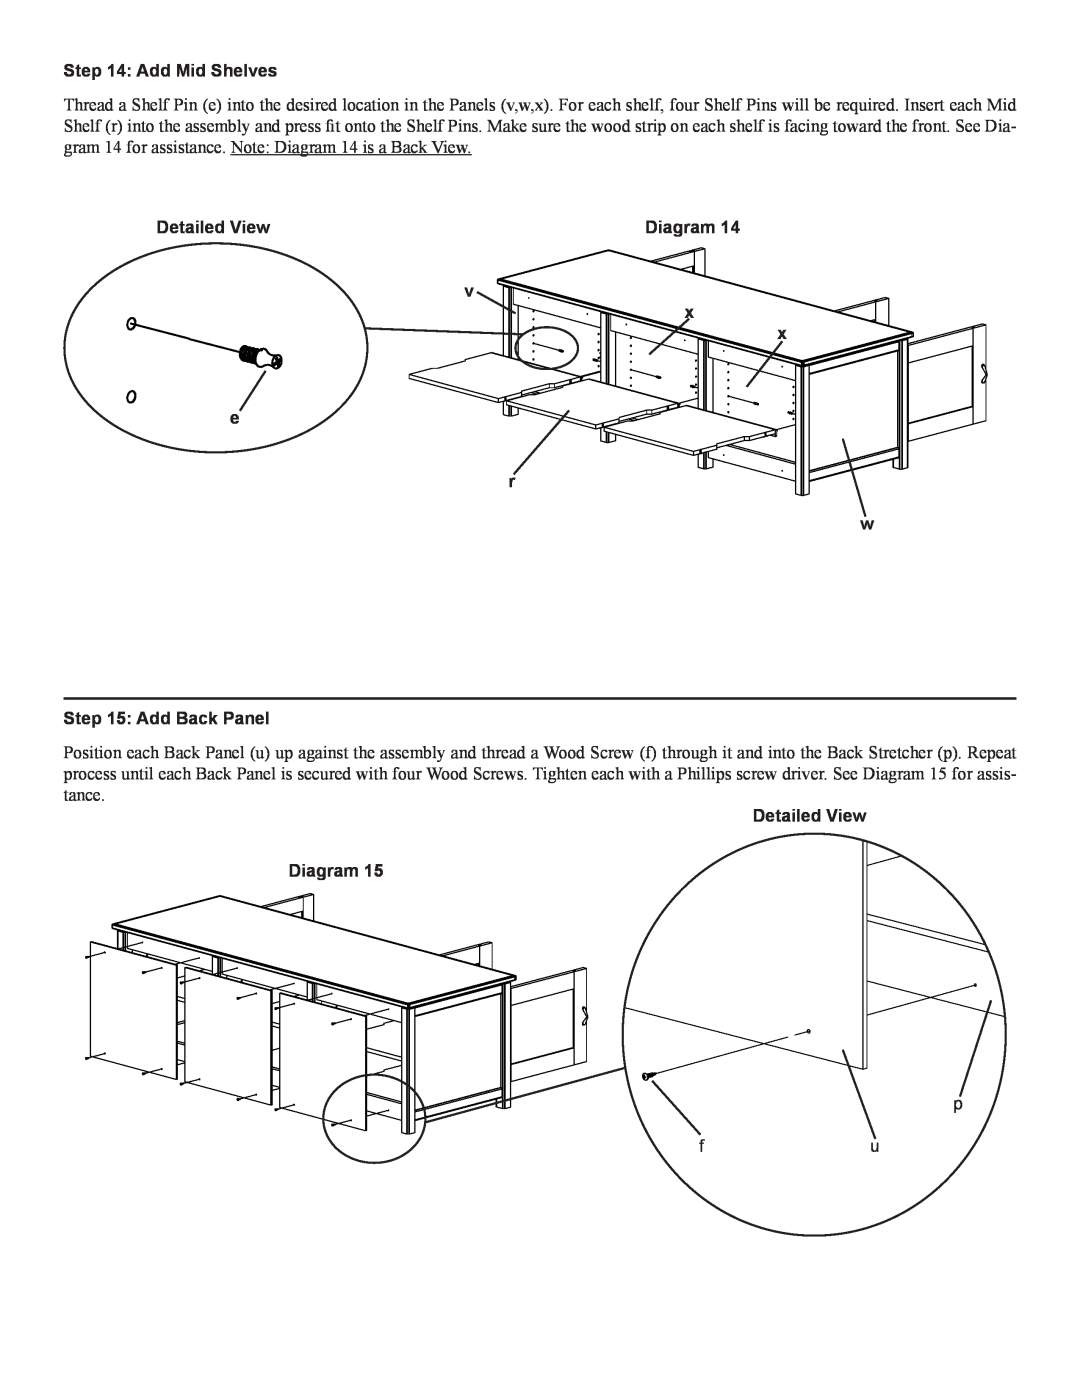 Sanus Systems WFV66 manual Add Mid Shelves, v x x e r w Add Back Panel, Detailed View Diagram 